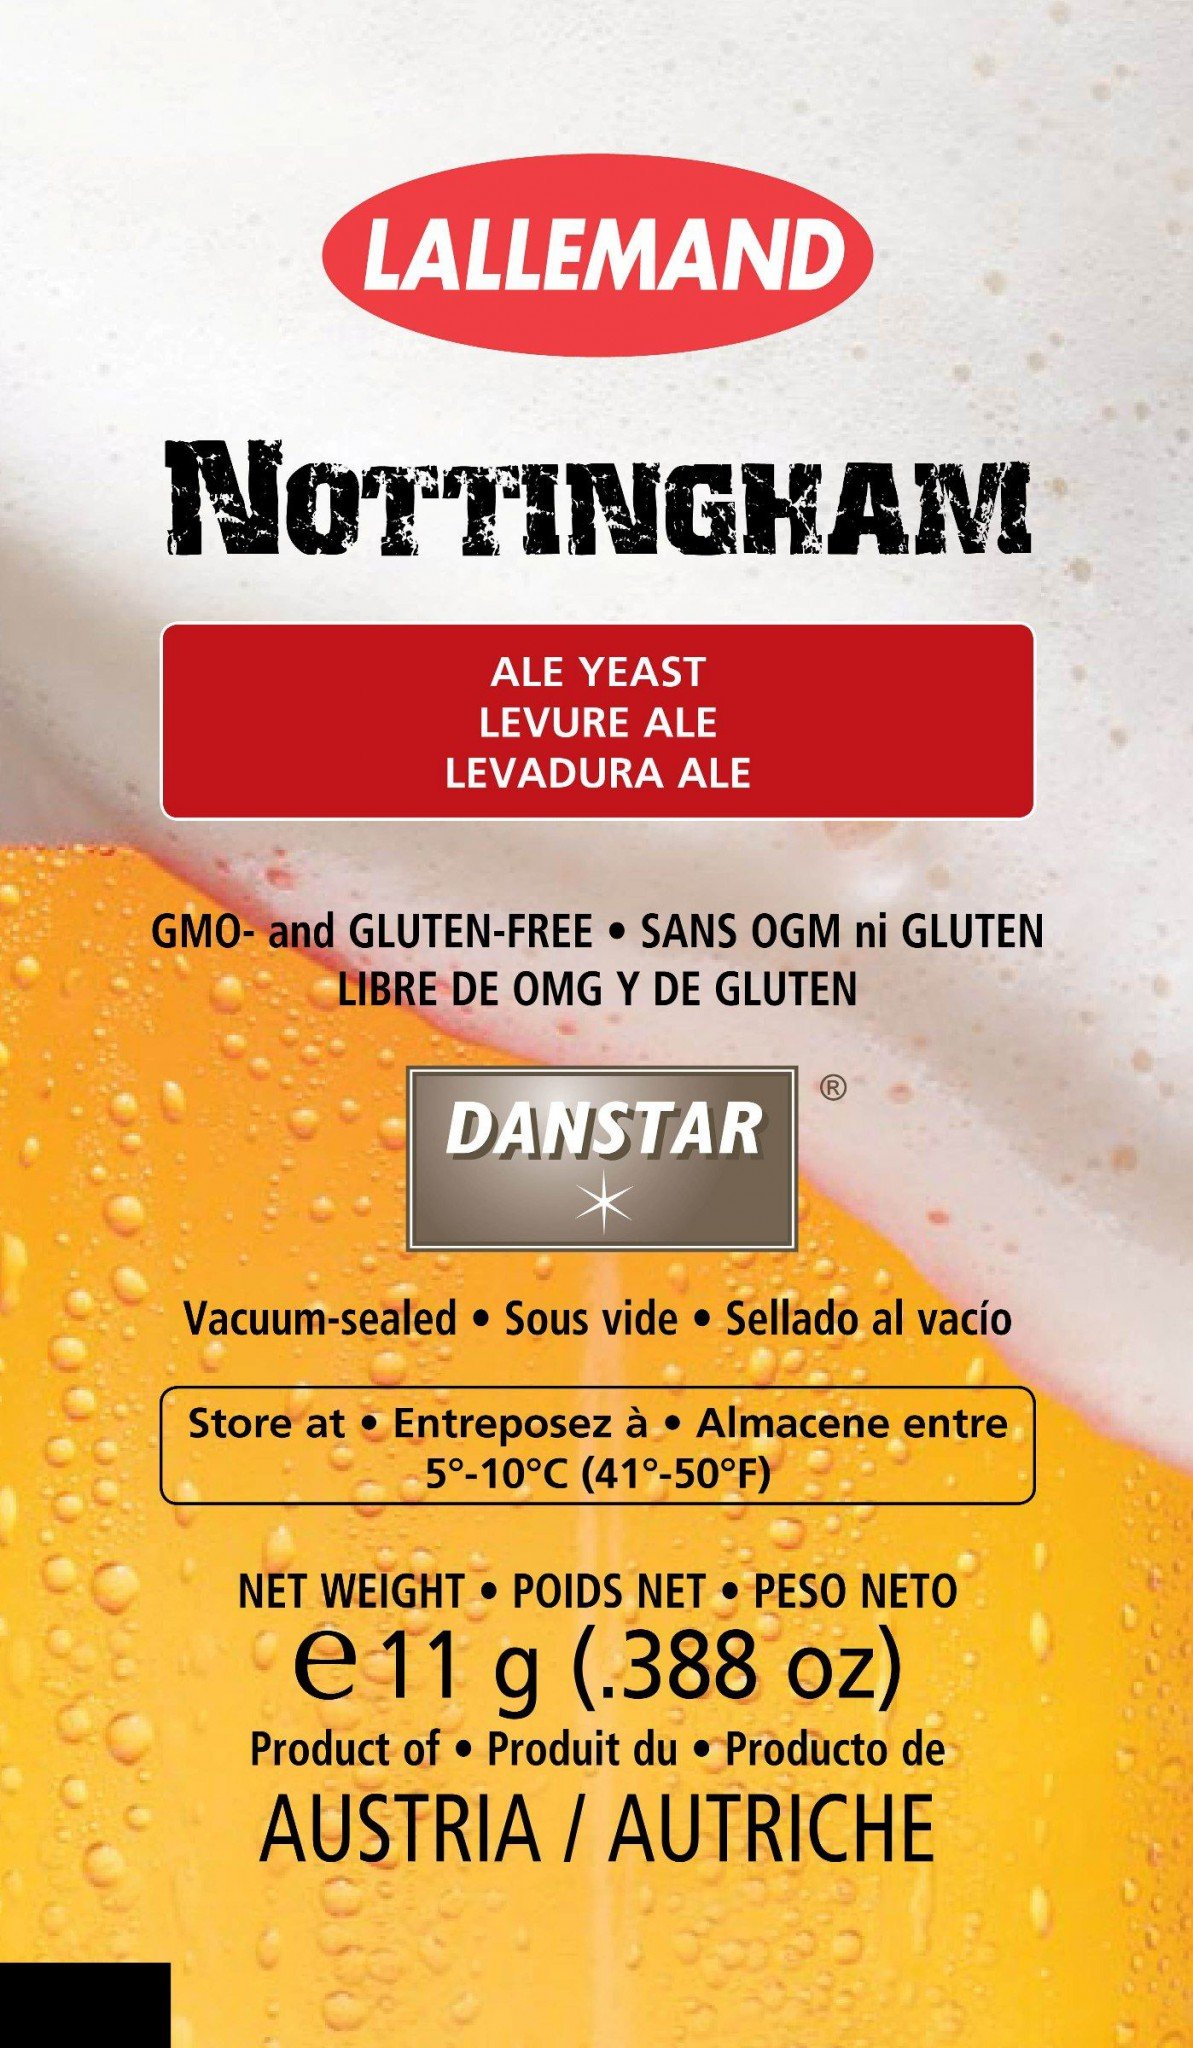 bad nottingham yeast